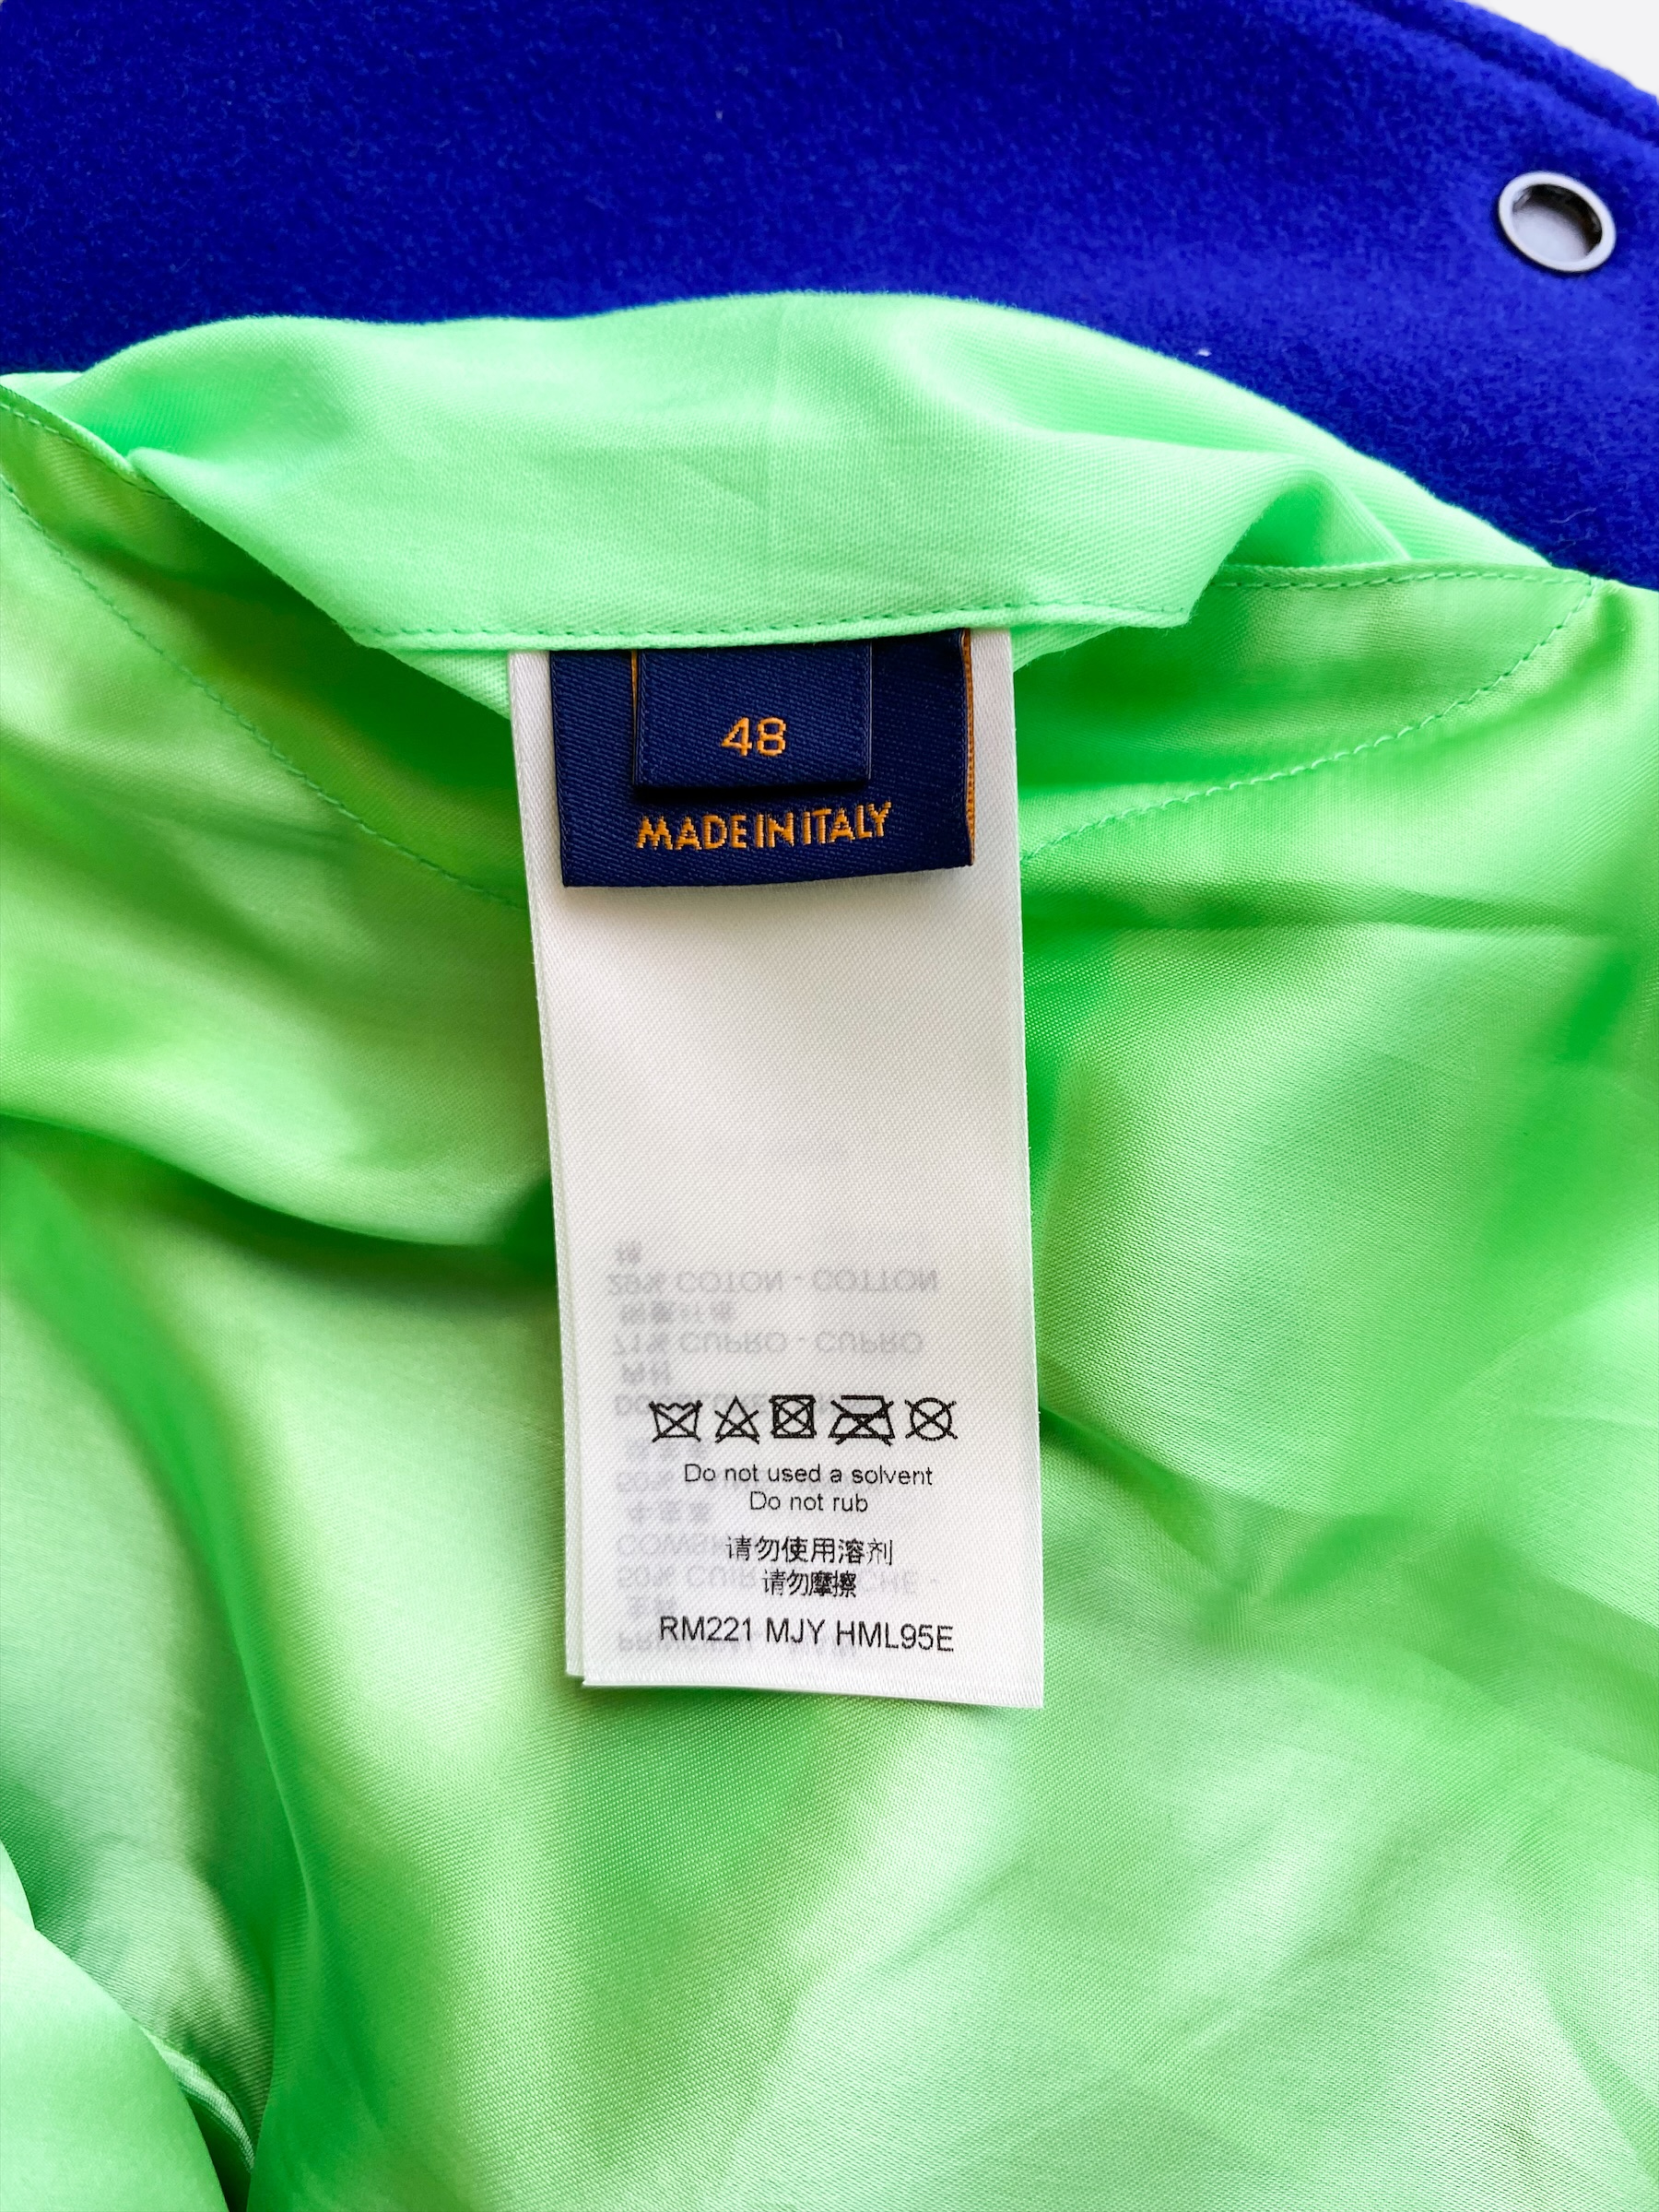 Louis Vuitton Blue & Neon Green Gradient Varsity Jacket